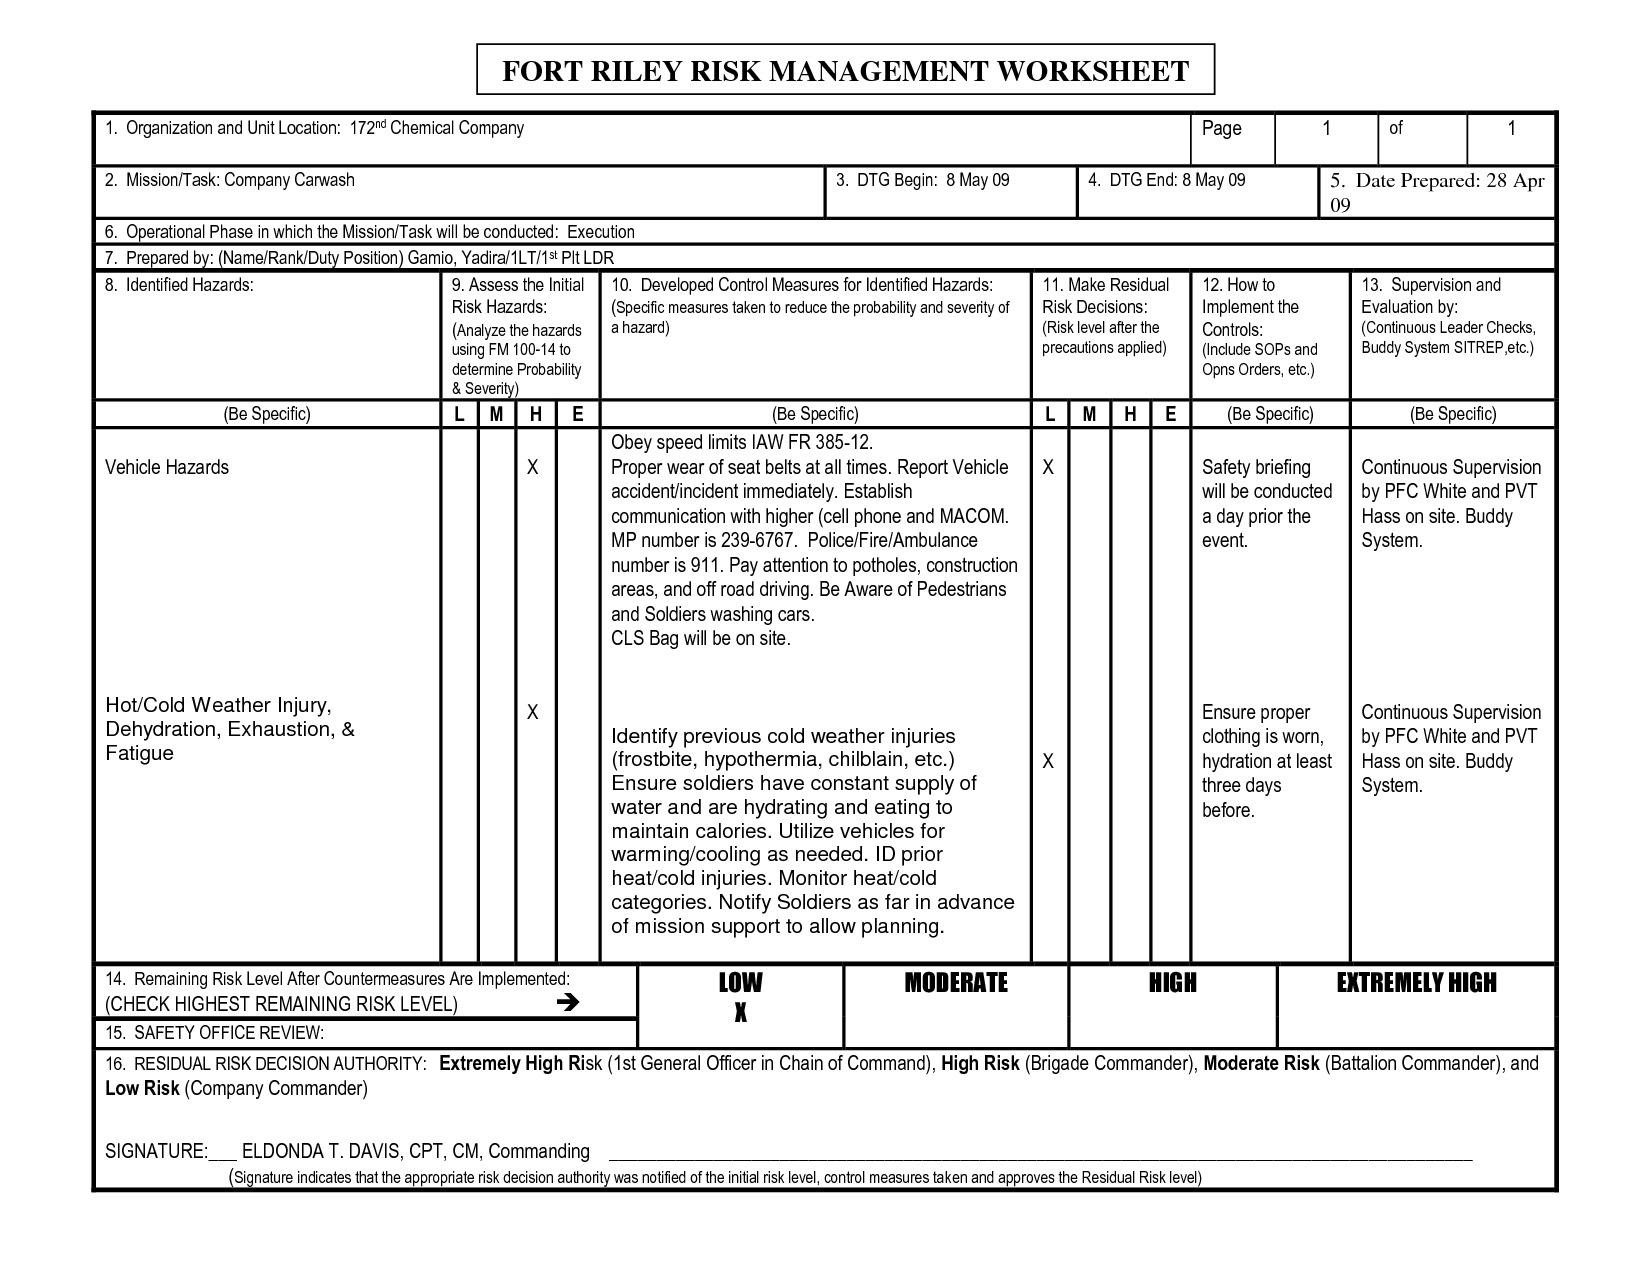 Risk Assessment Worksheet In Word And Pdf Formats - Bank2home.com